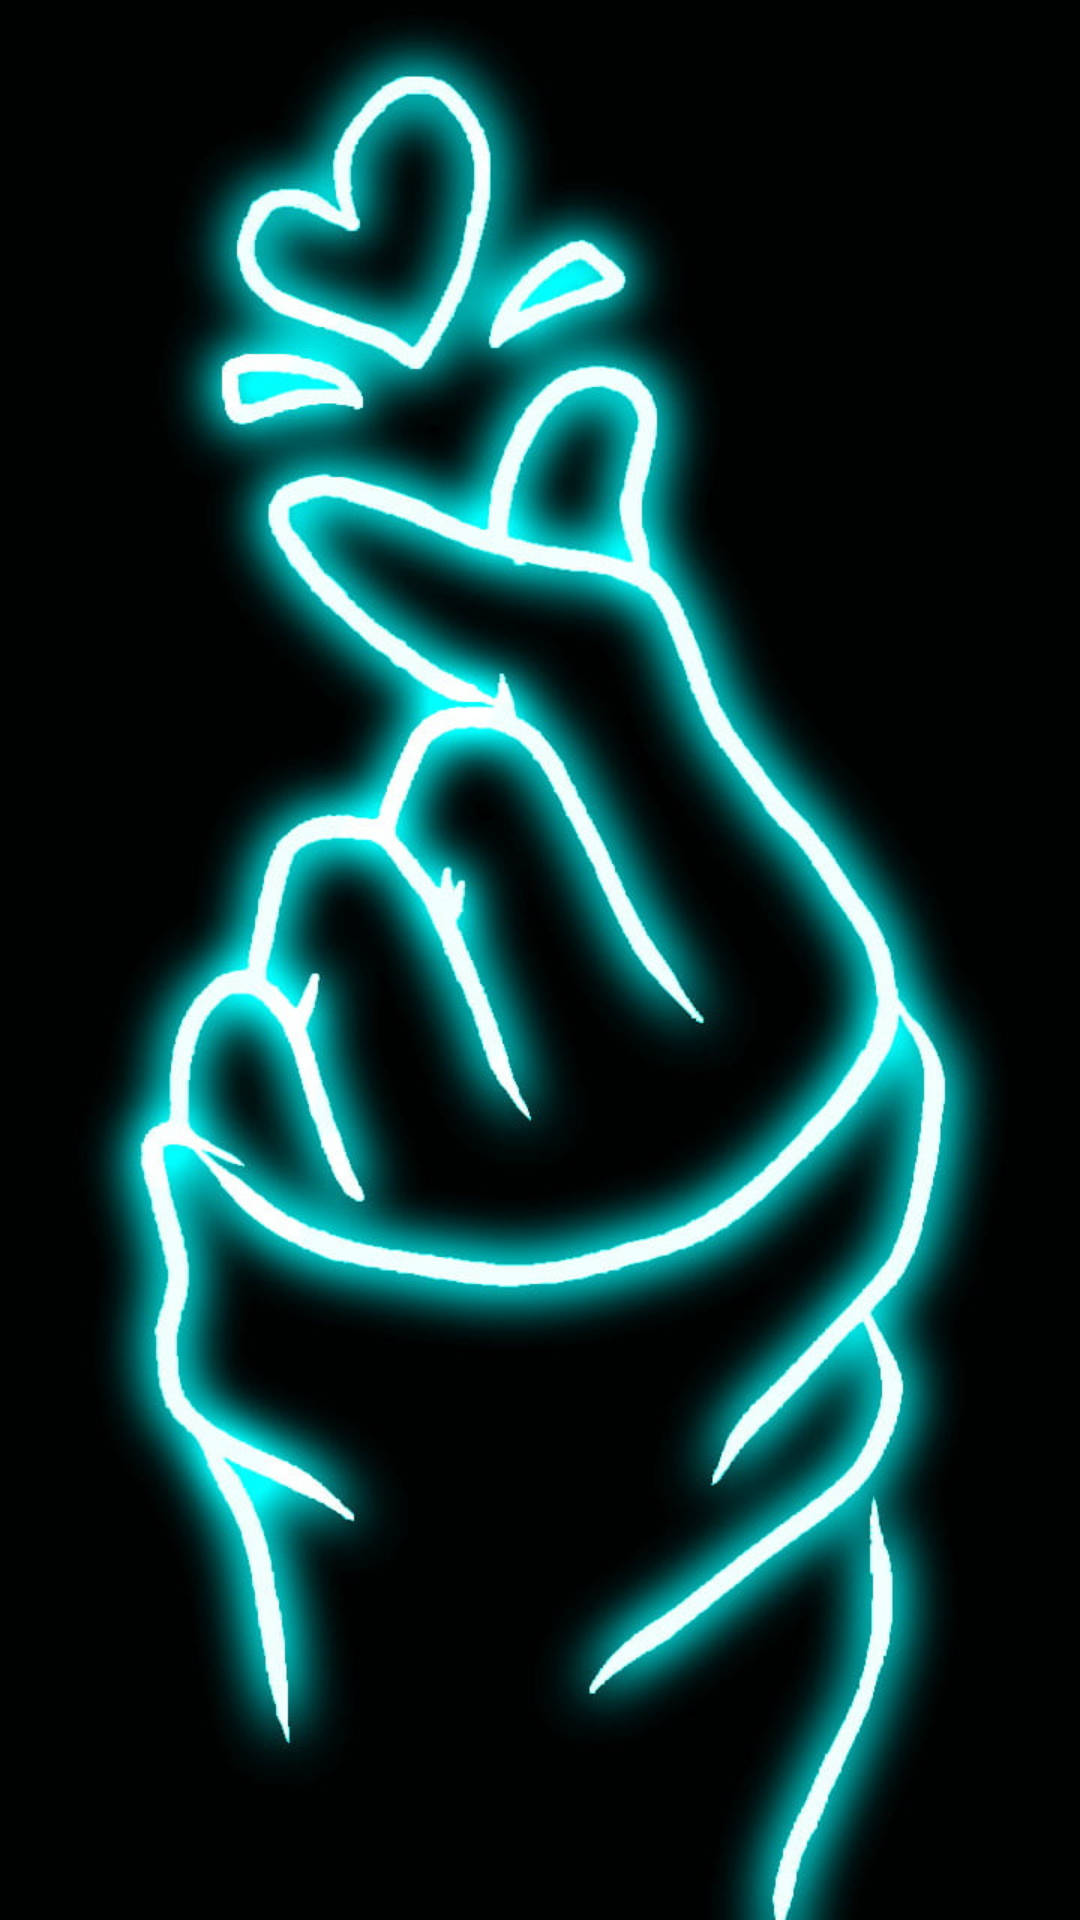 Download Finger Heart Turquoise Neon Light Wallpaper | Wallpapers.com